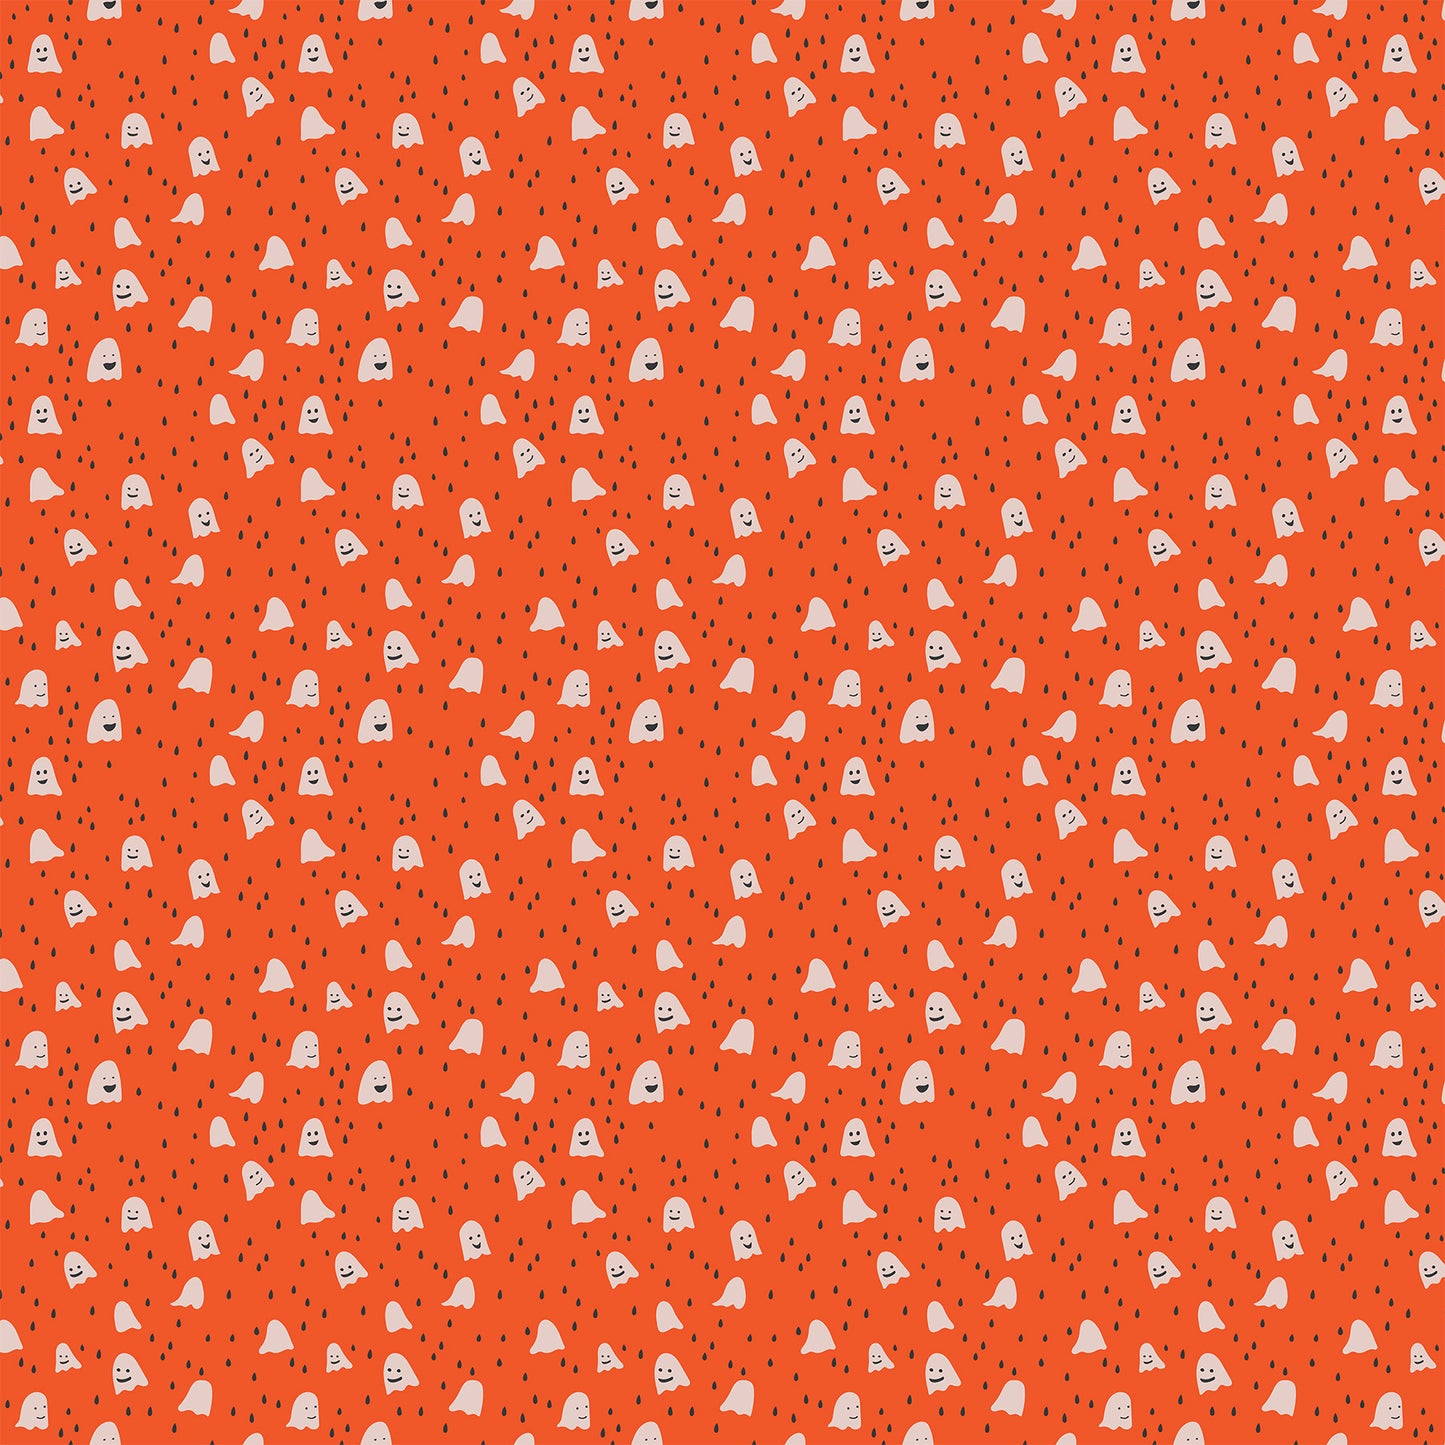 Manufacturer: Figo Fabrics Designer: Dana Willard Collection: Ghosttown Print Name: Ghosts in Orange Material: 100% Cotton Weight: Quilting  SKU: 90521-56 Width: 44 inches